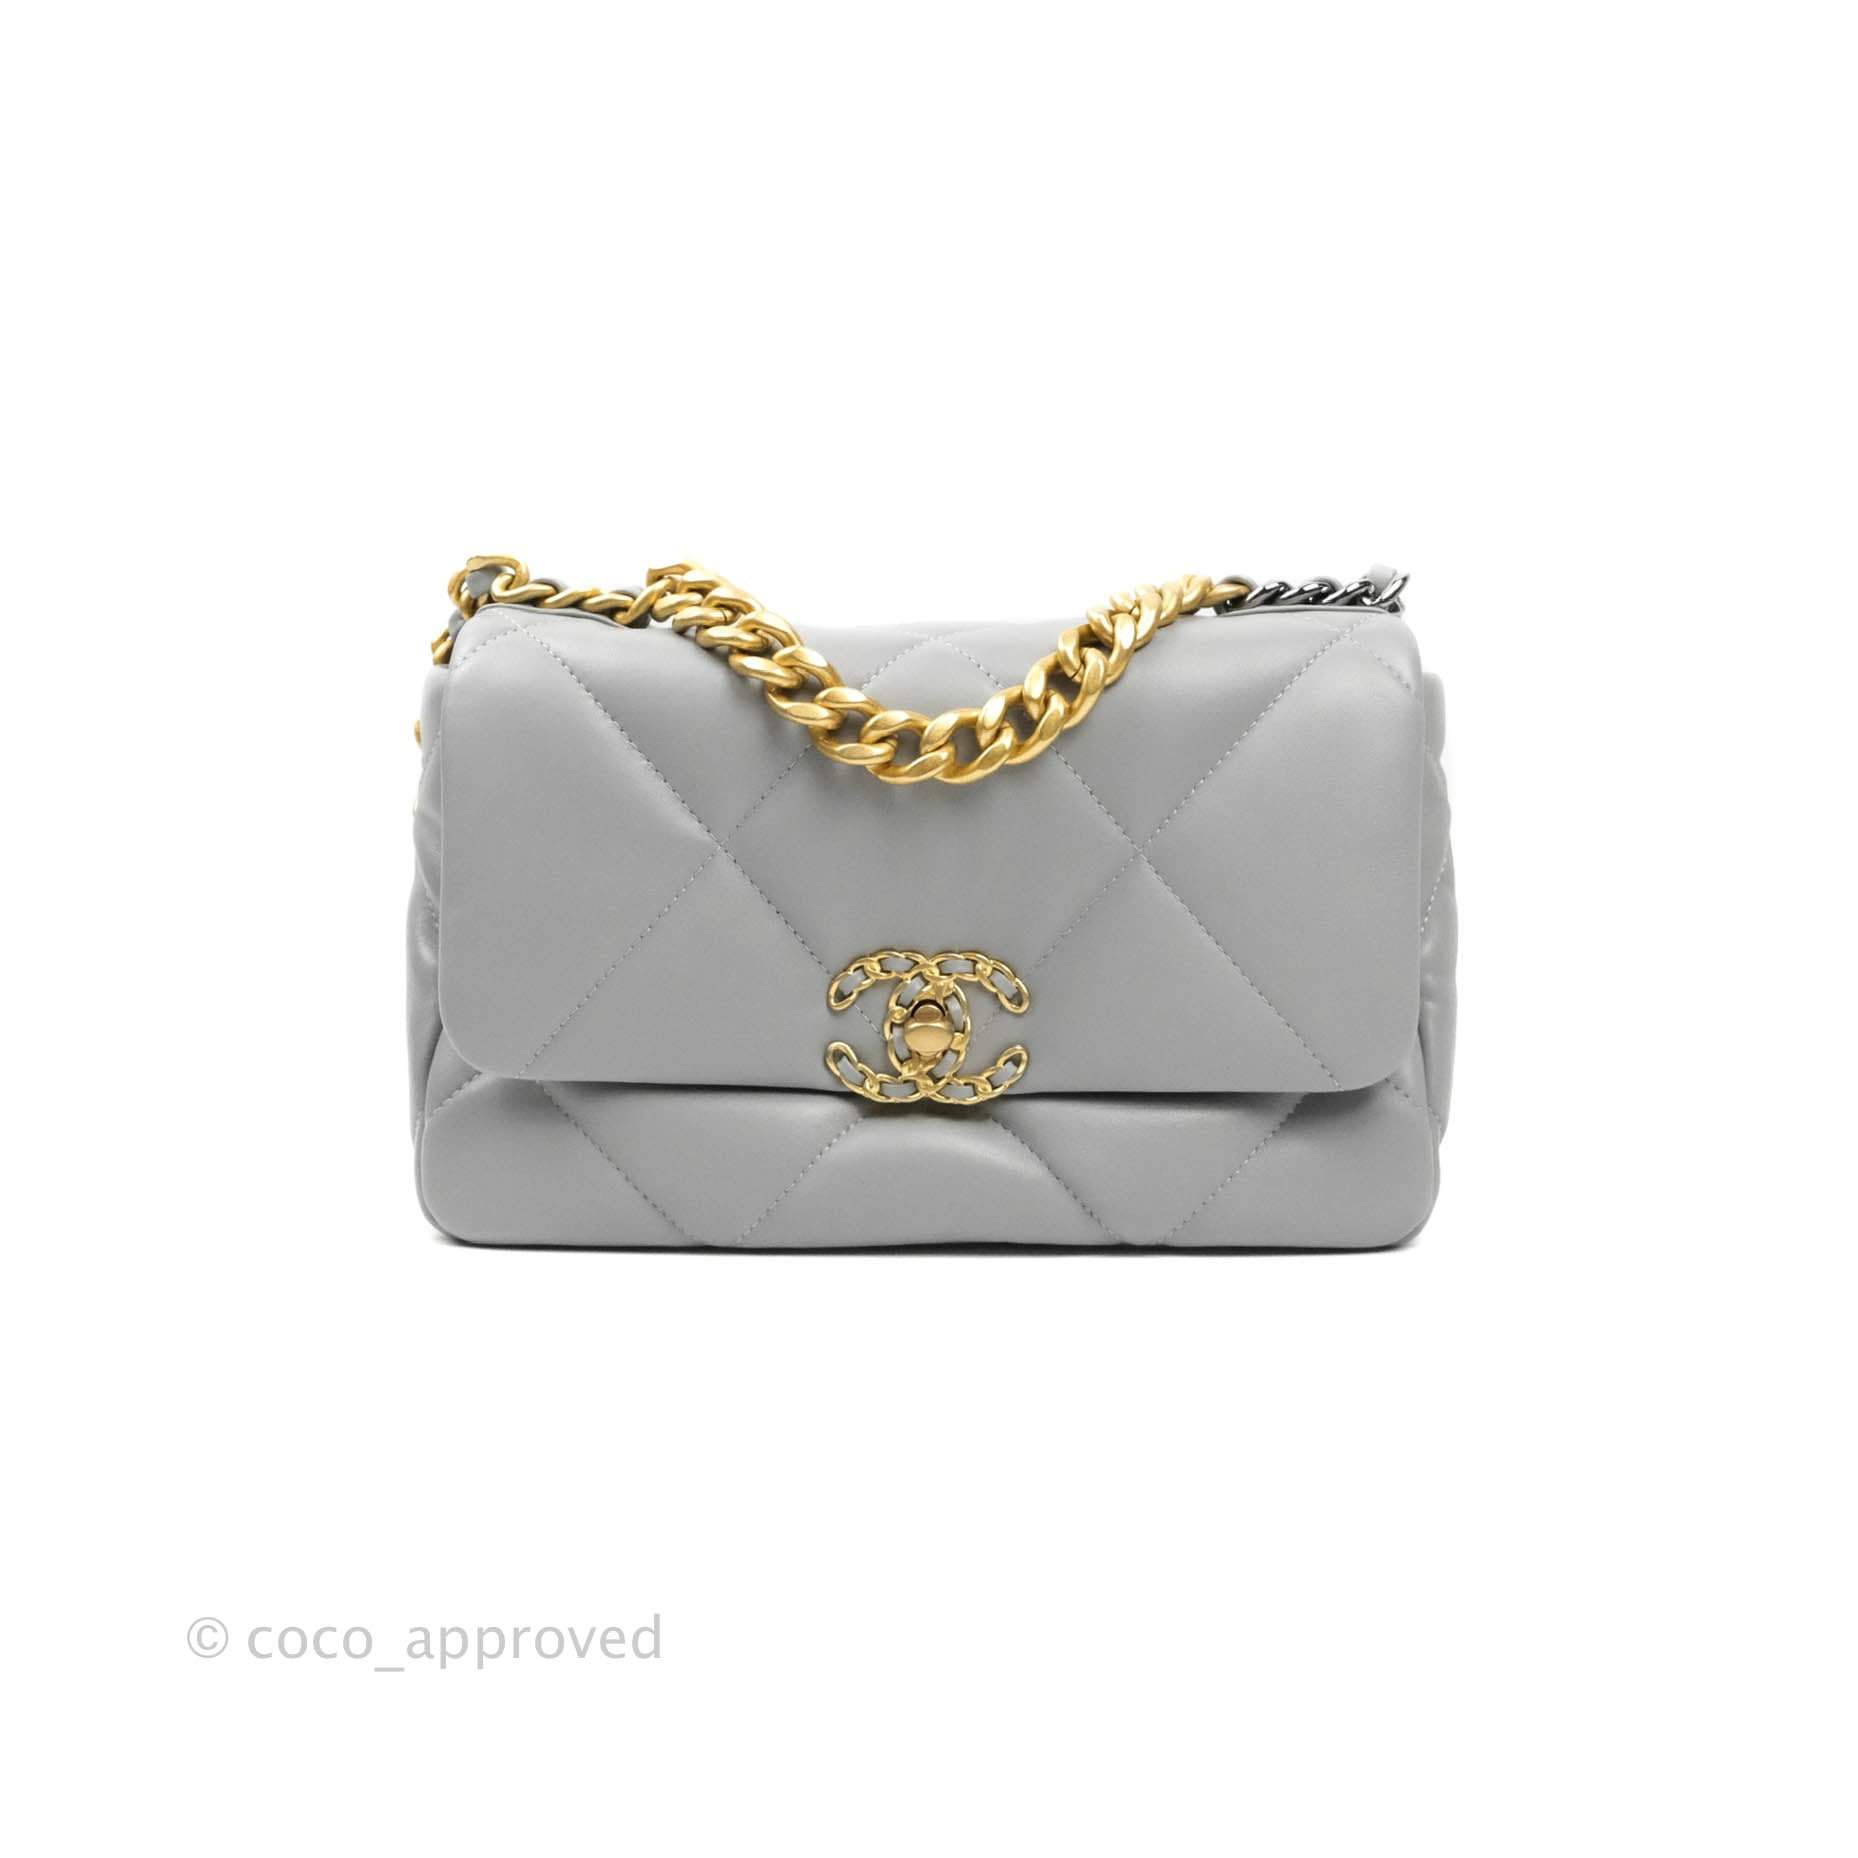 Chanel - Chanel 19 Flap Bag - Small - Grey Lambskin - MHW - Unused